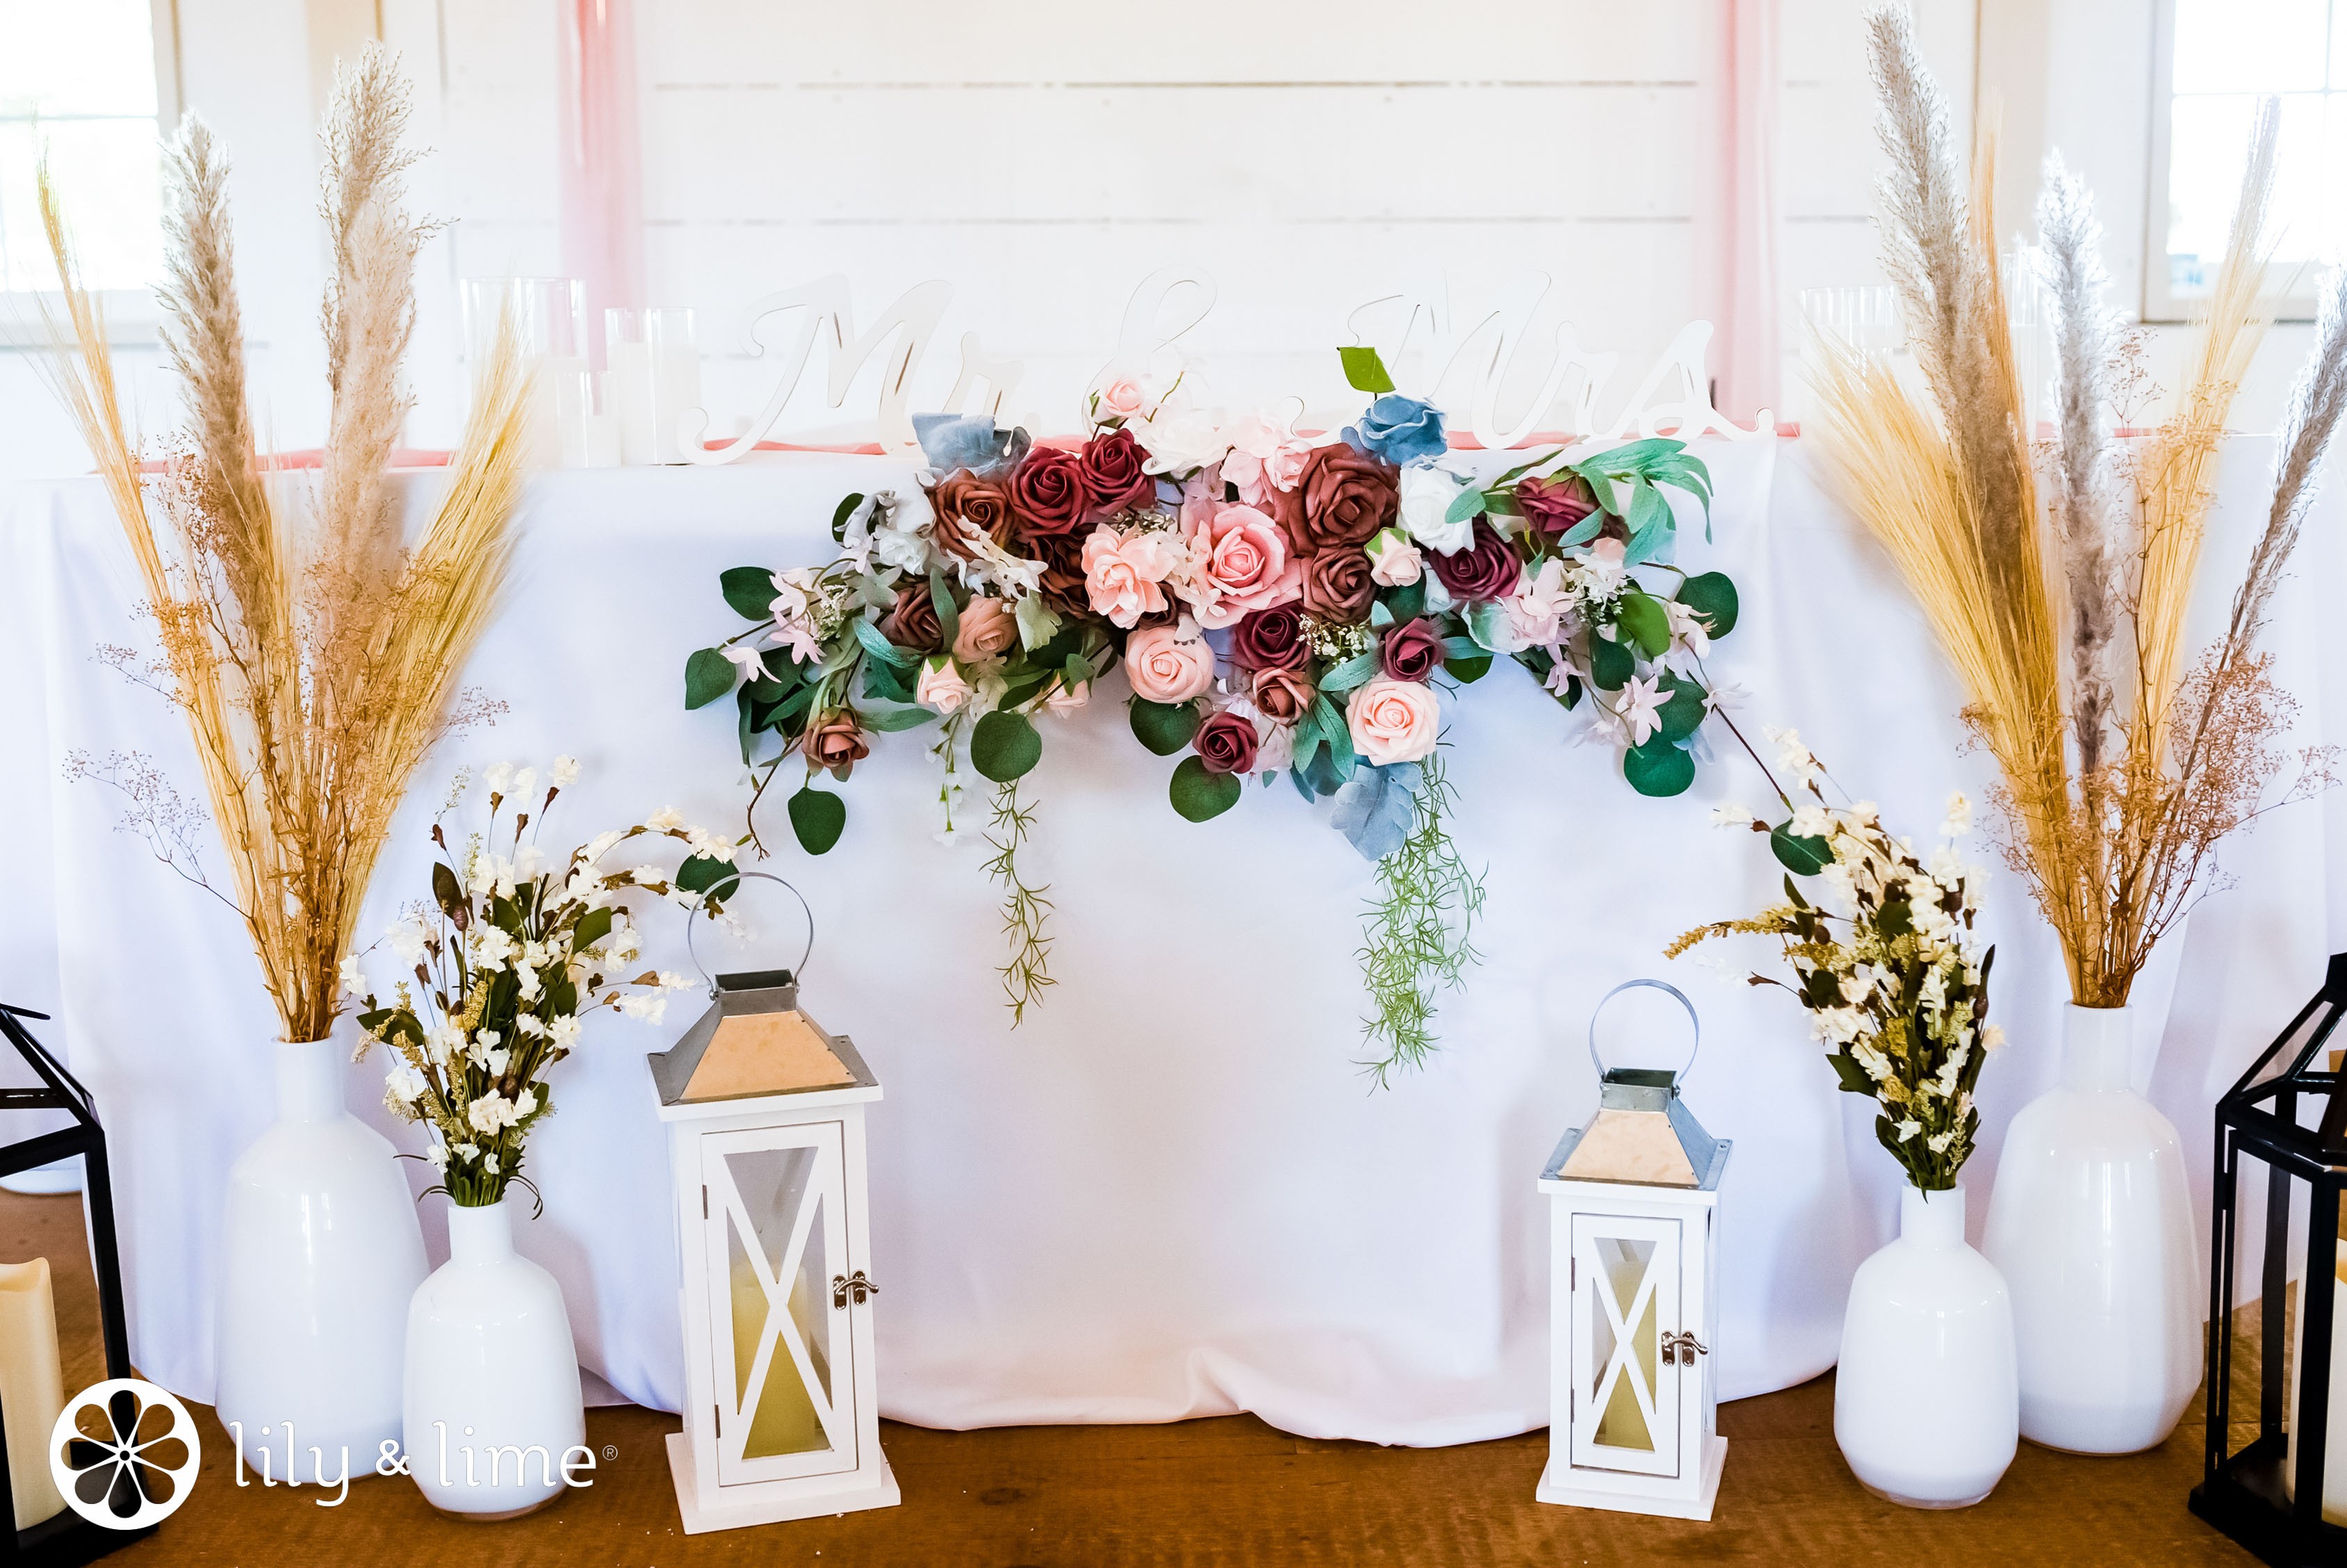 Rustic Wedding Ideas: Budget-Friendly Themes, Decor & More